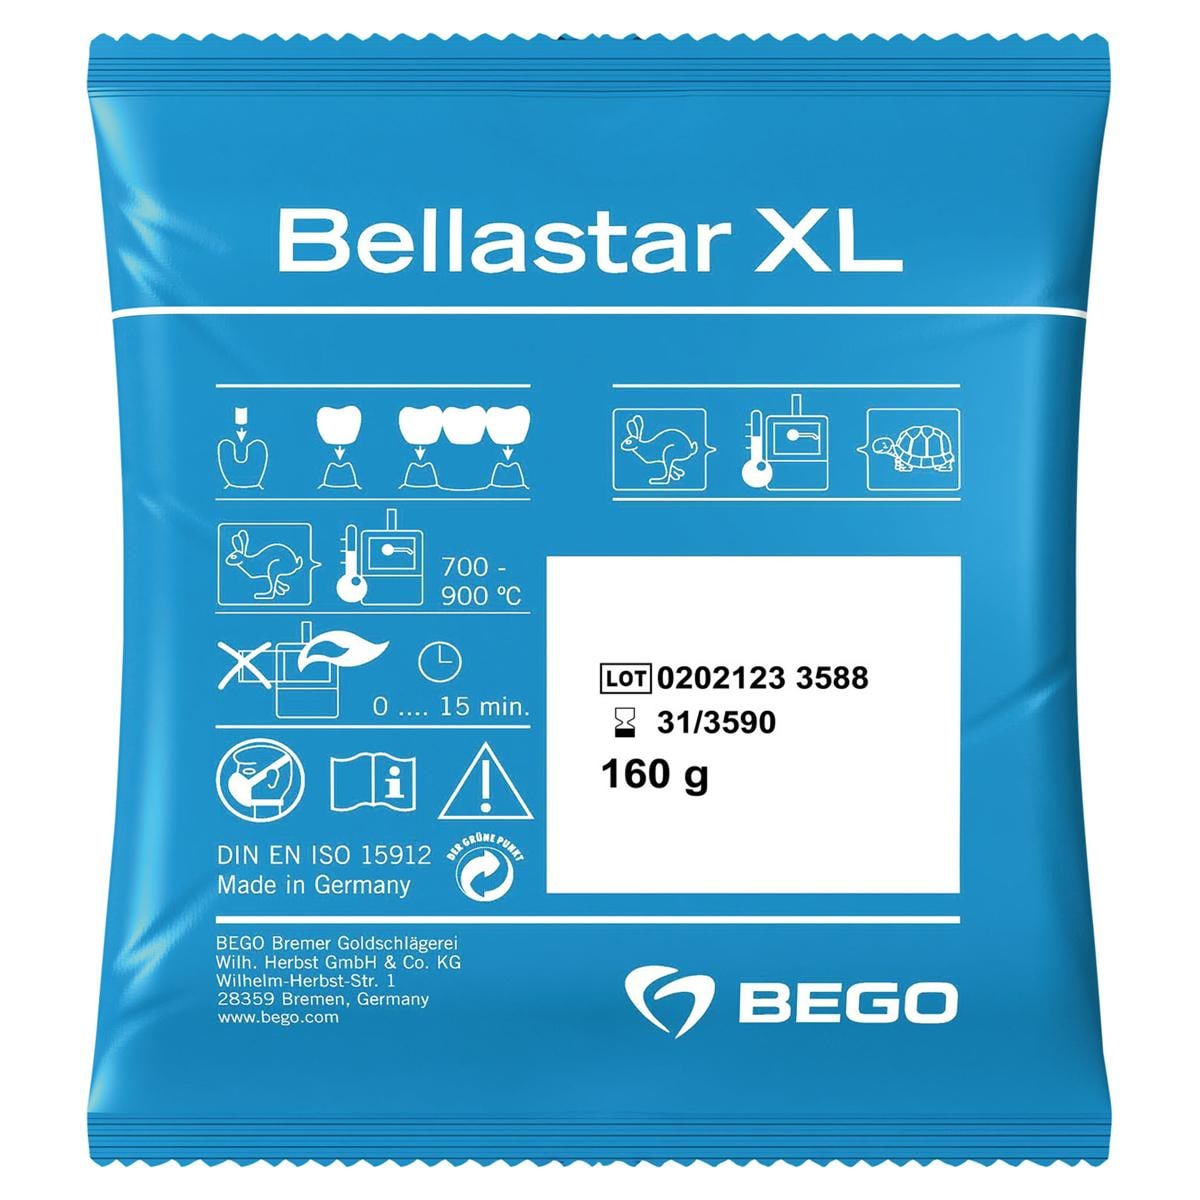 BellaStar® XL - Beutel 80 x 160 g